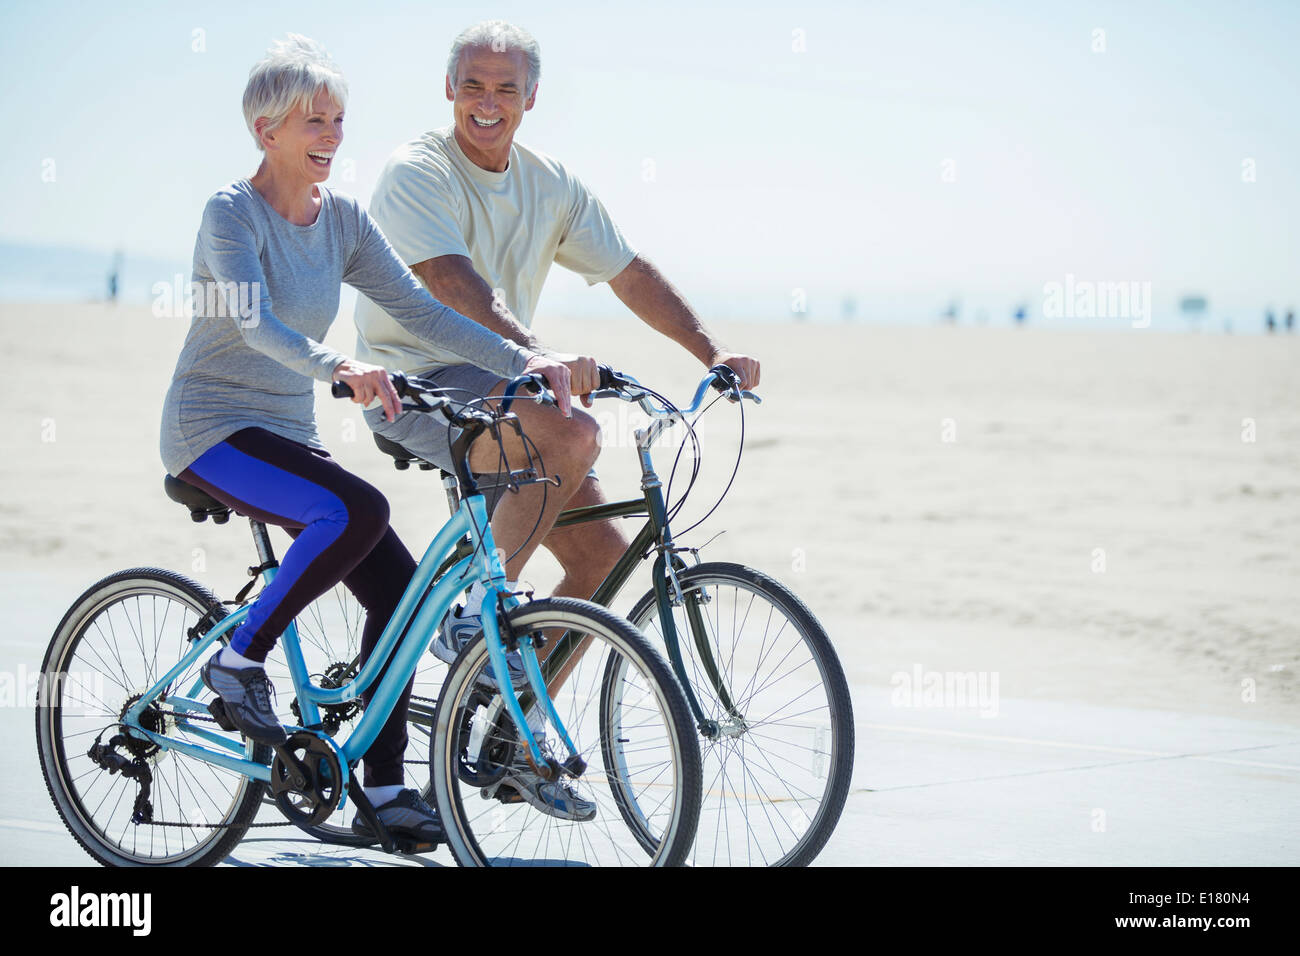 Senior couple riding bicycles on beach boardwalk Stock Photo